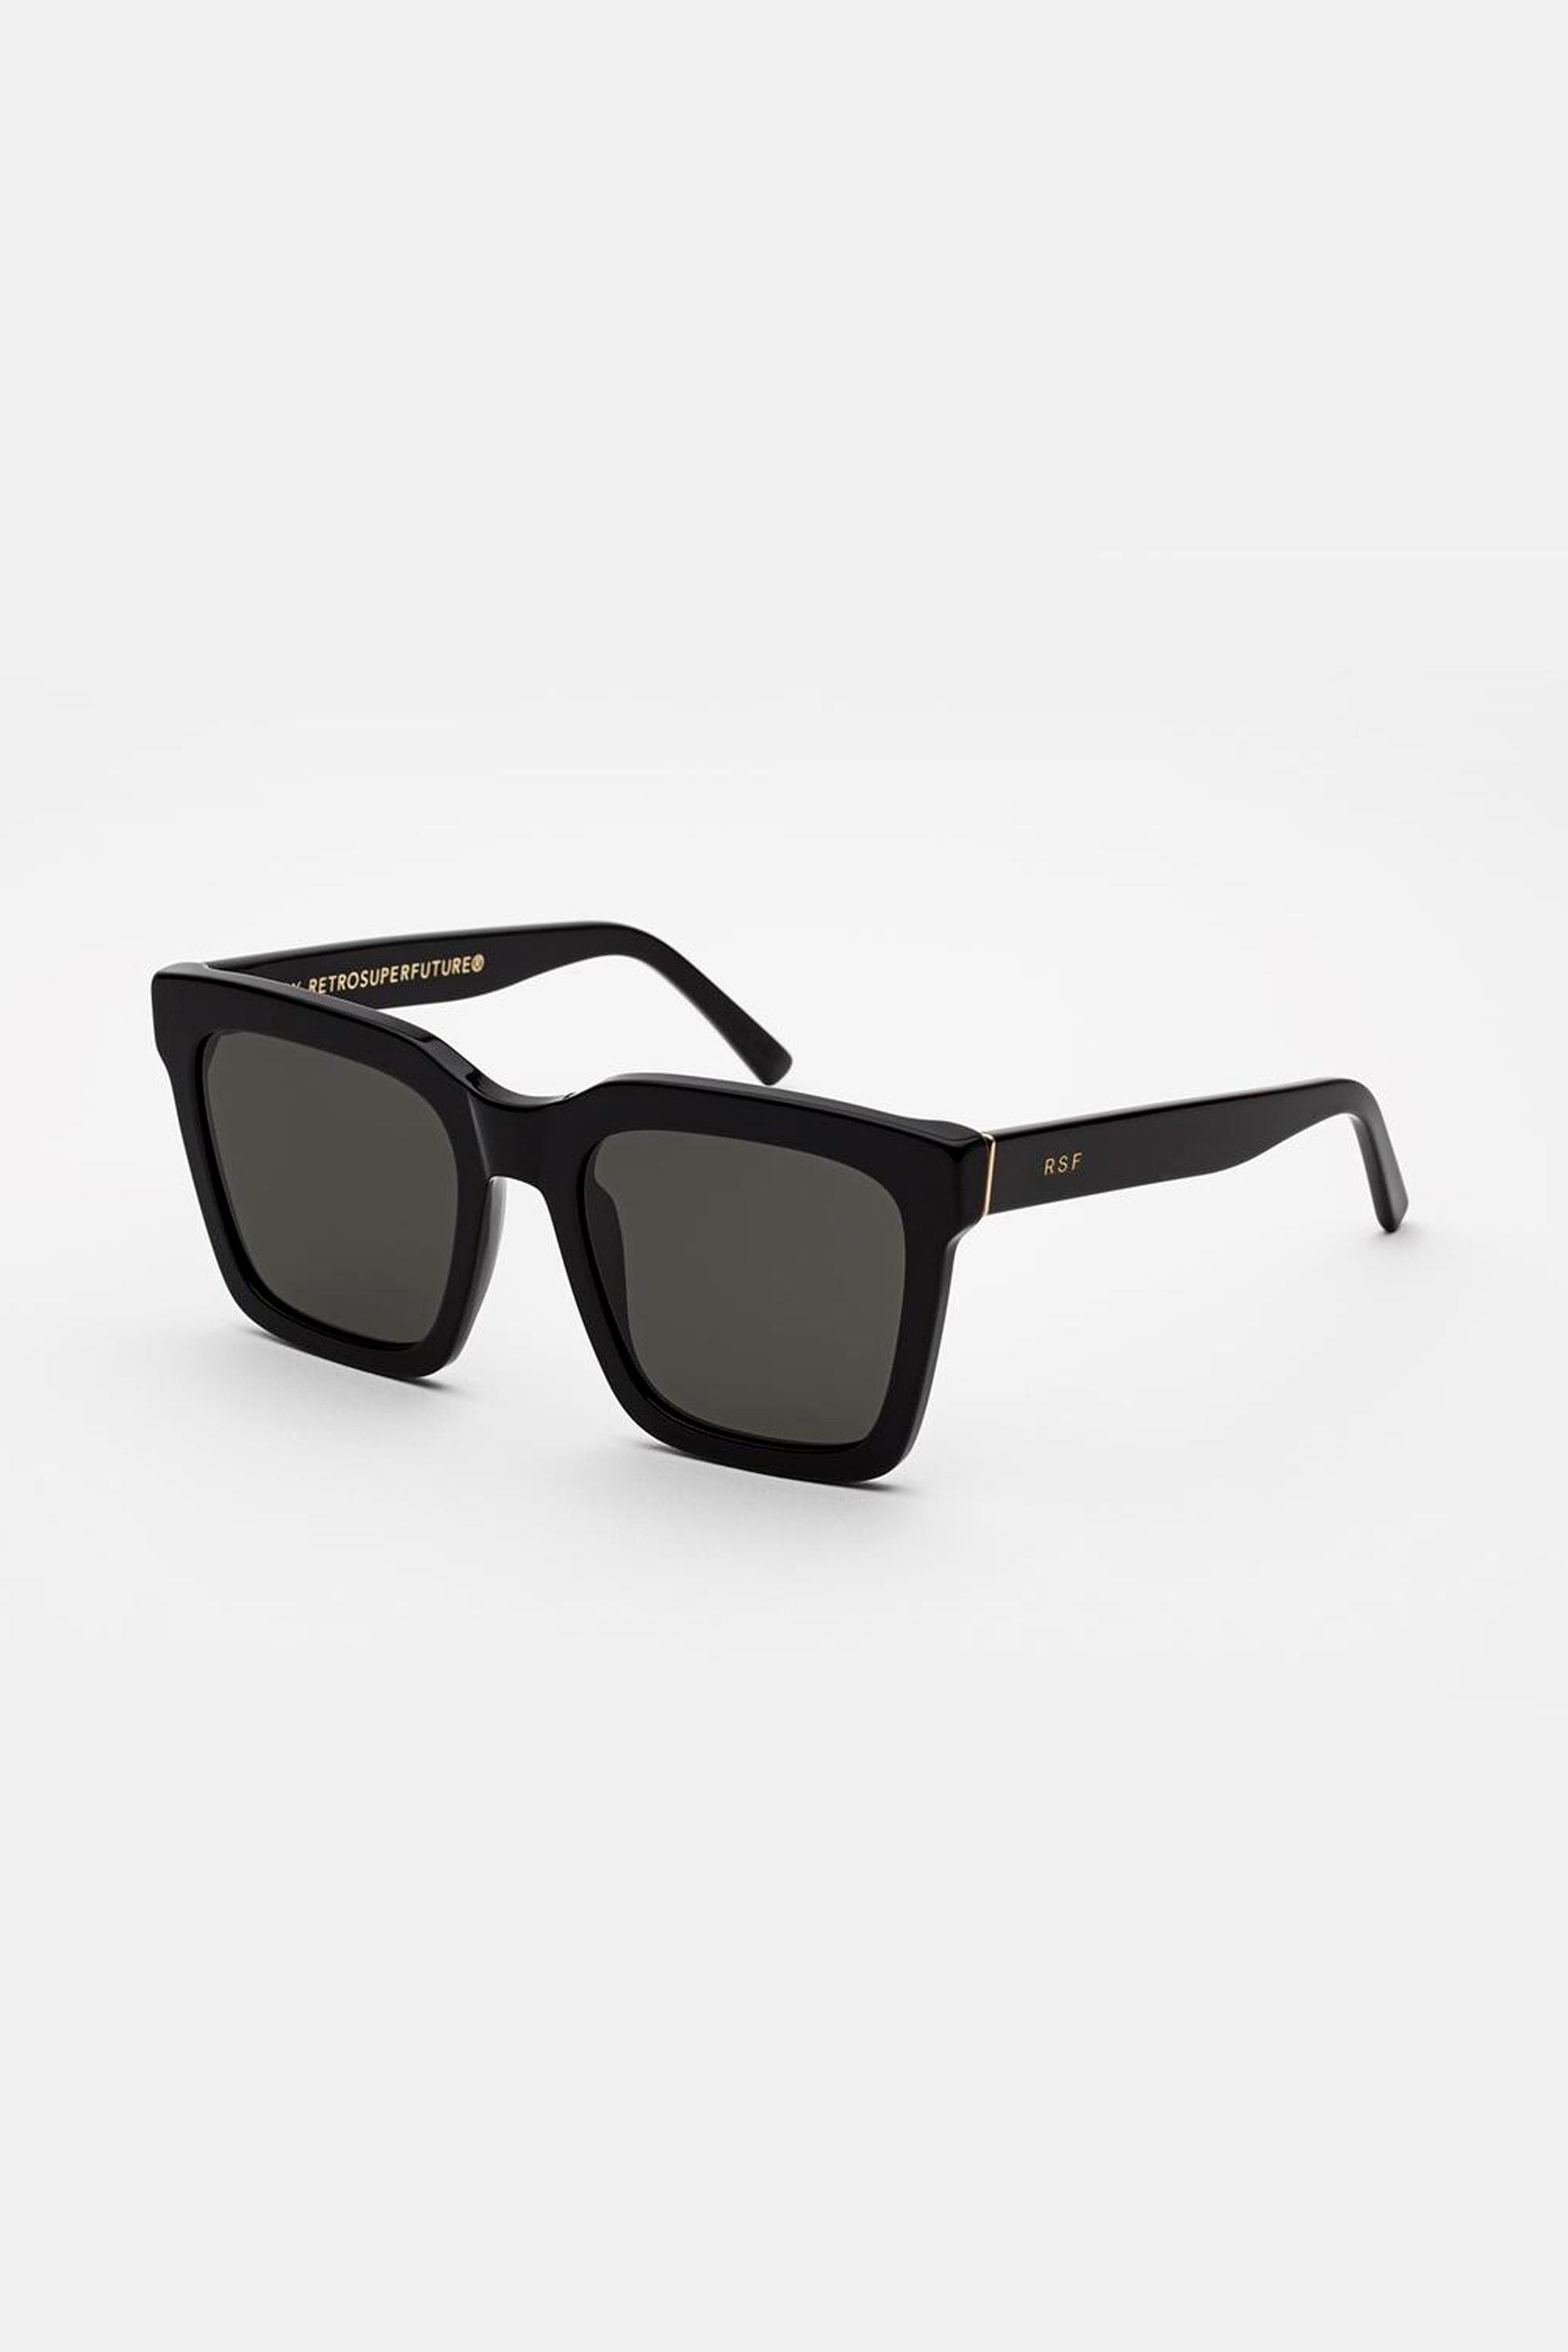 Retrosuperfuture aalto black sunglasses - Eyewear Club